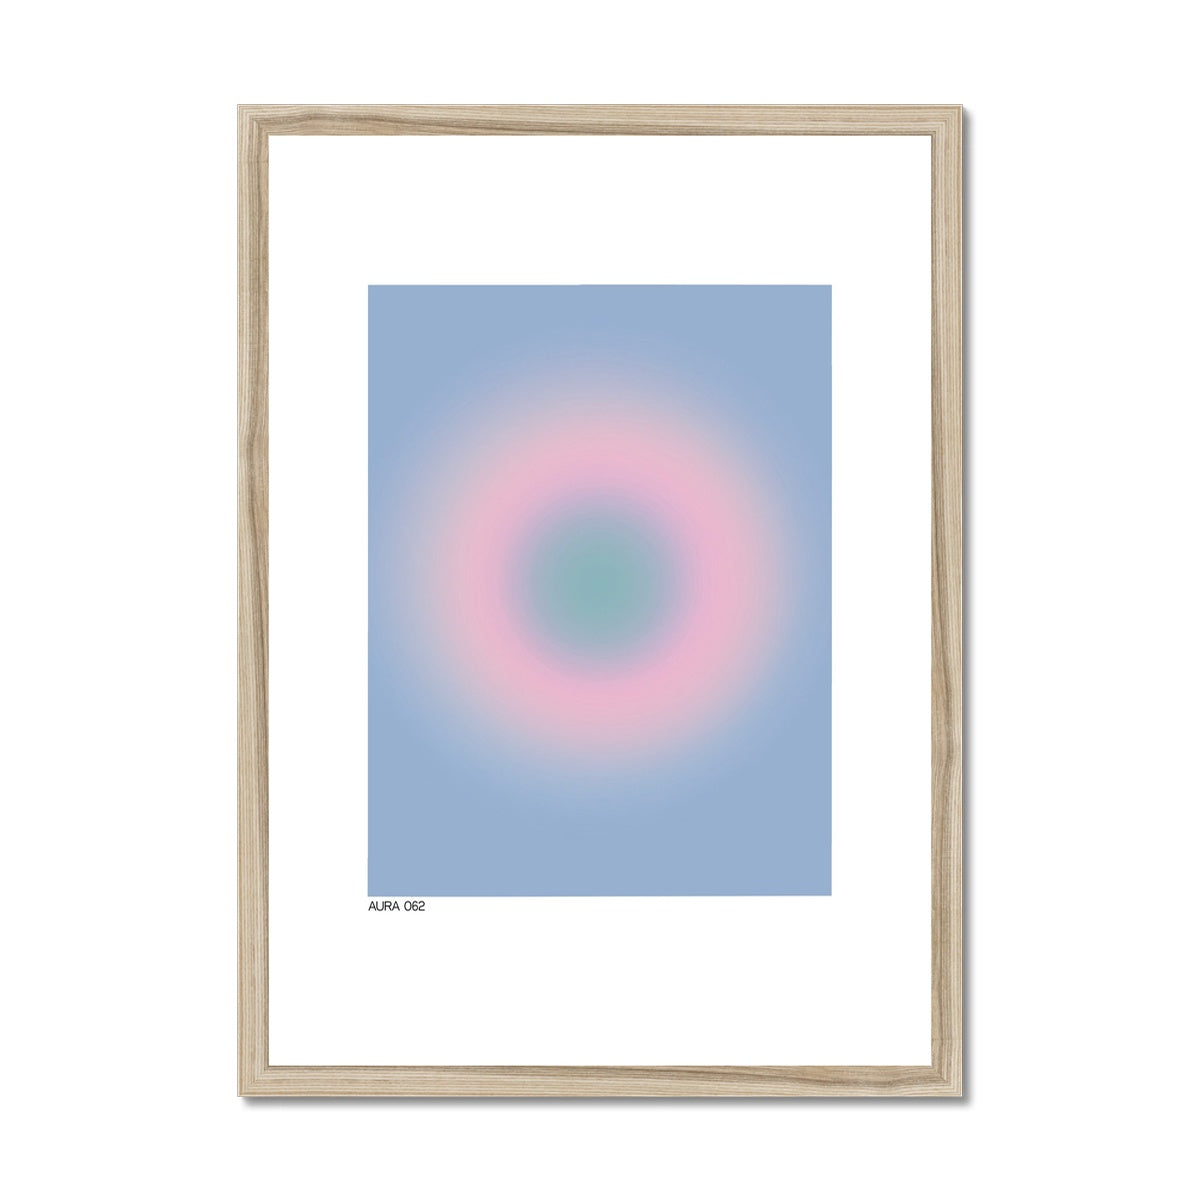 aura 062 Framed & Mounted Print